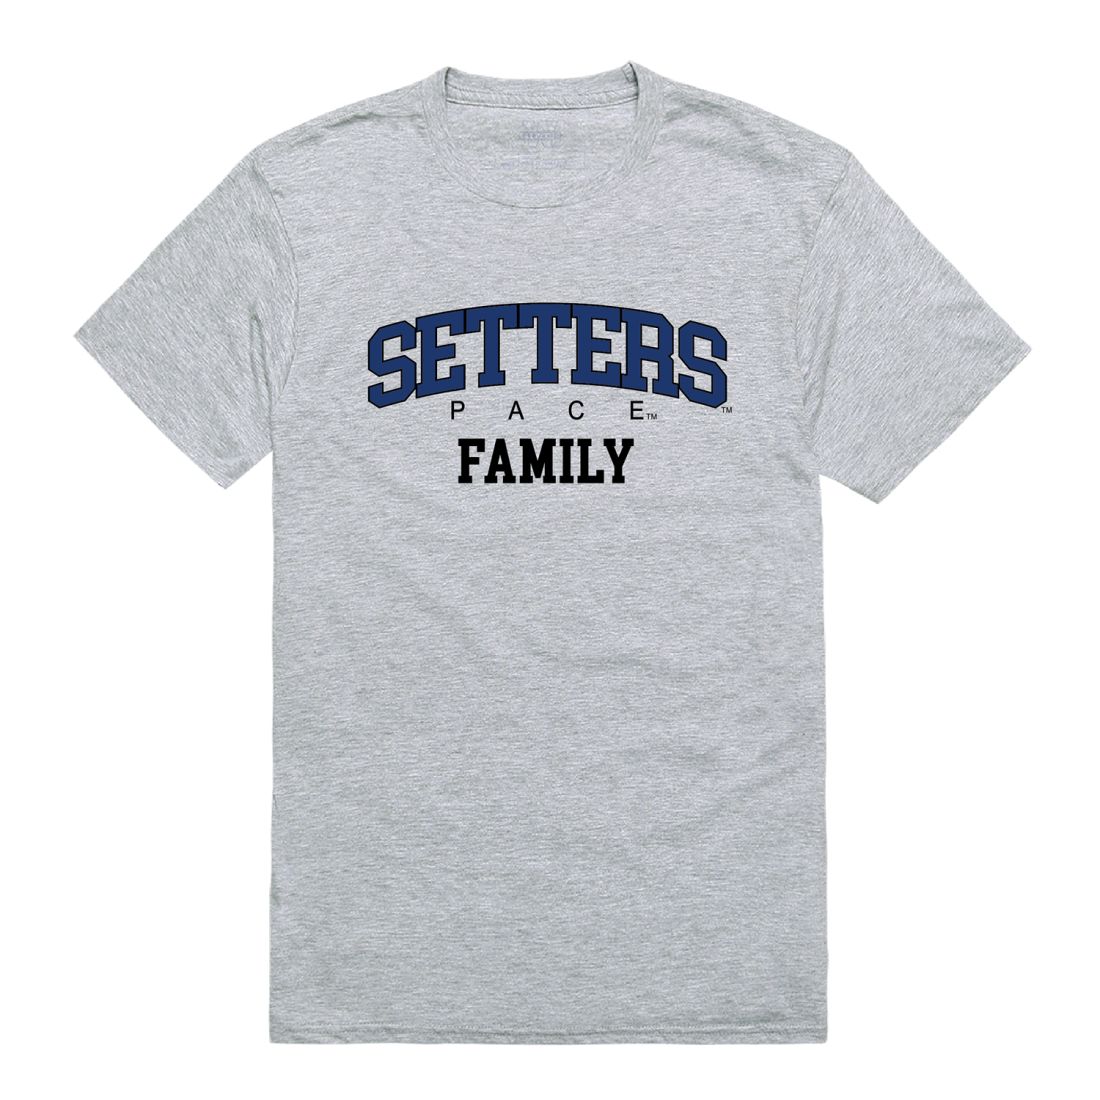 Pace University Setters Family T-Shirt